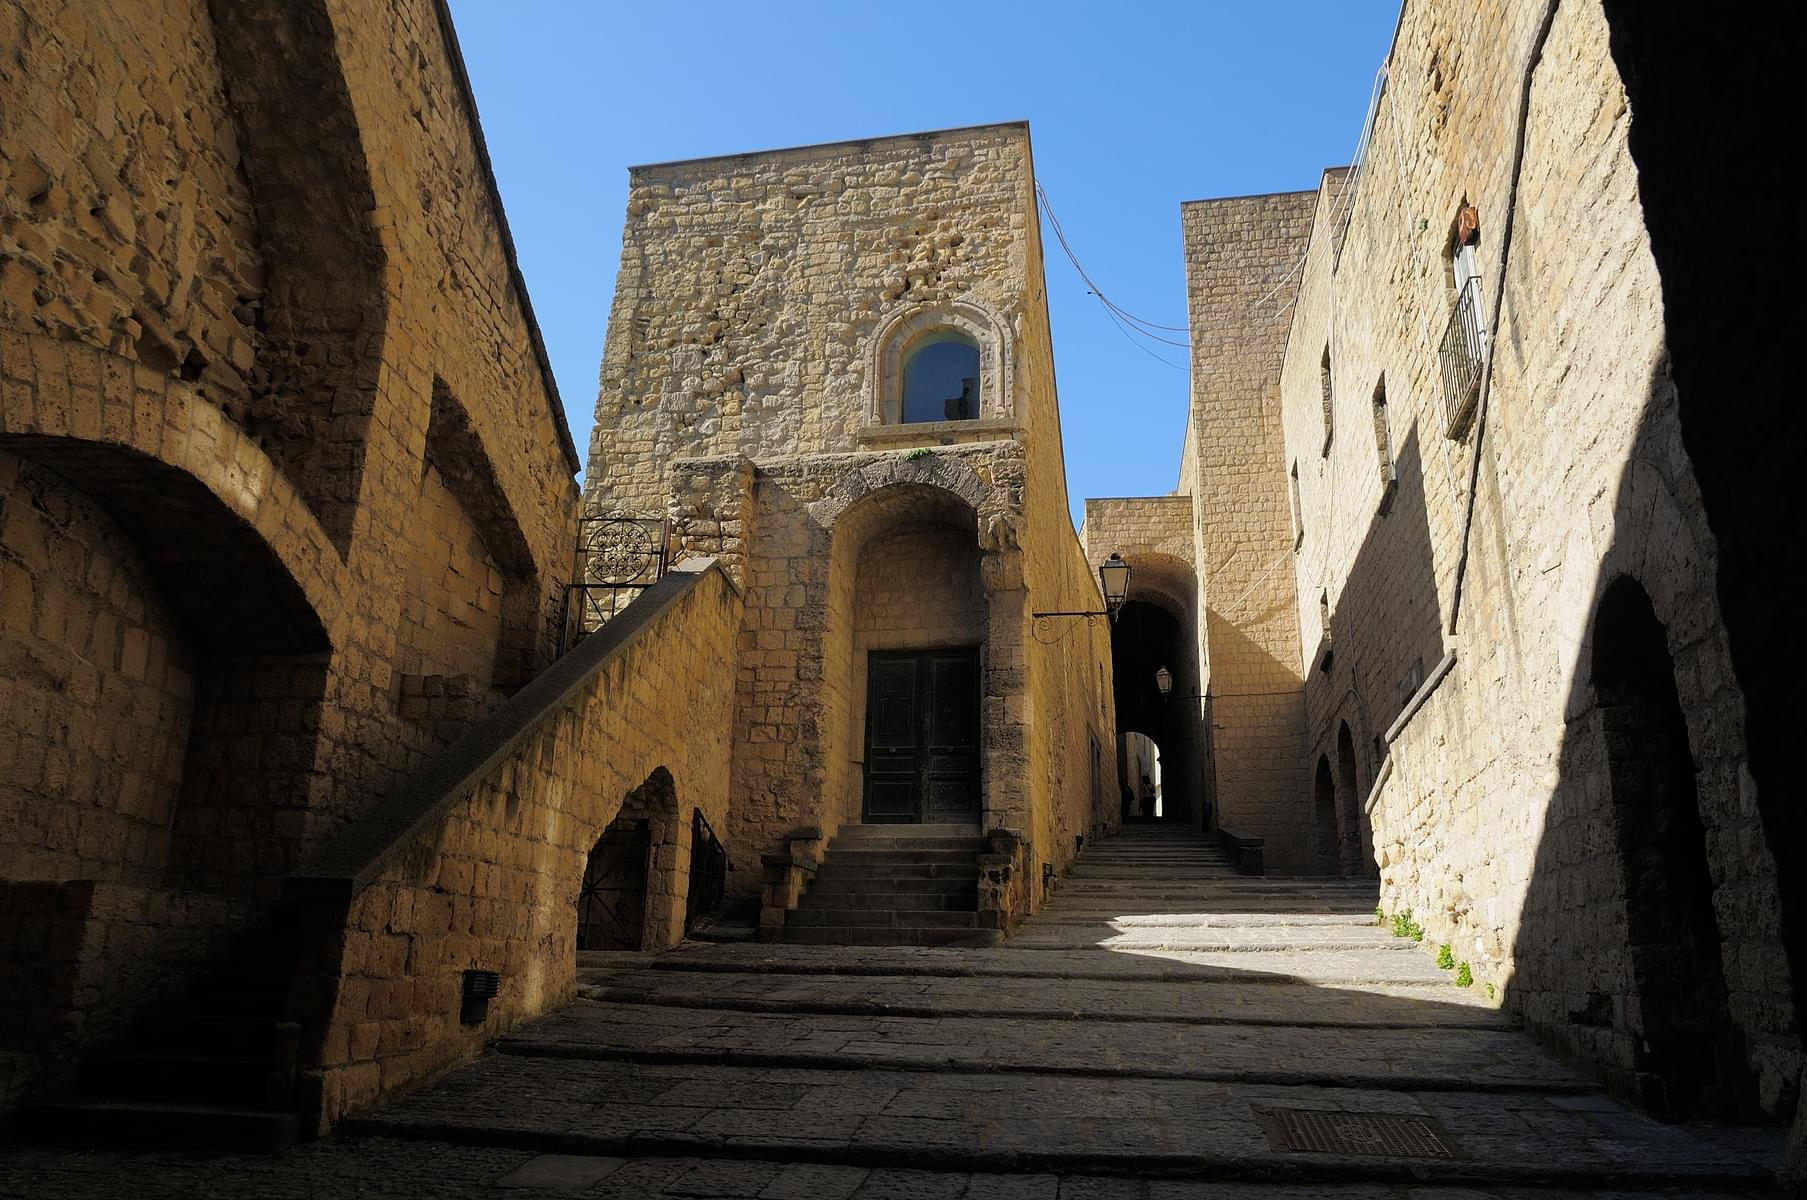 The Interior rooms of the Castel dell’Ovo